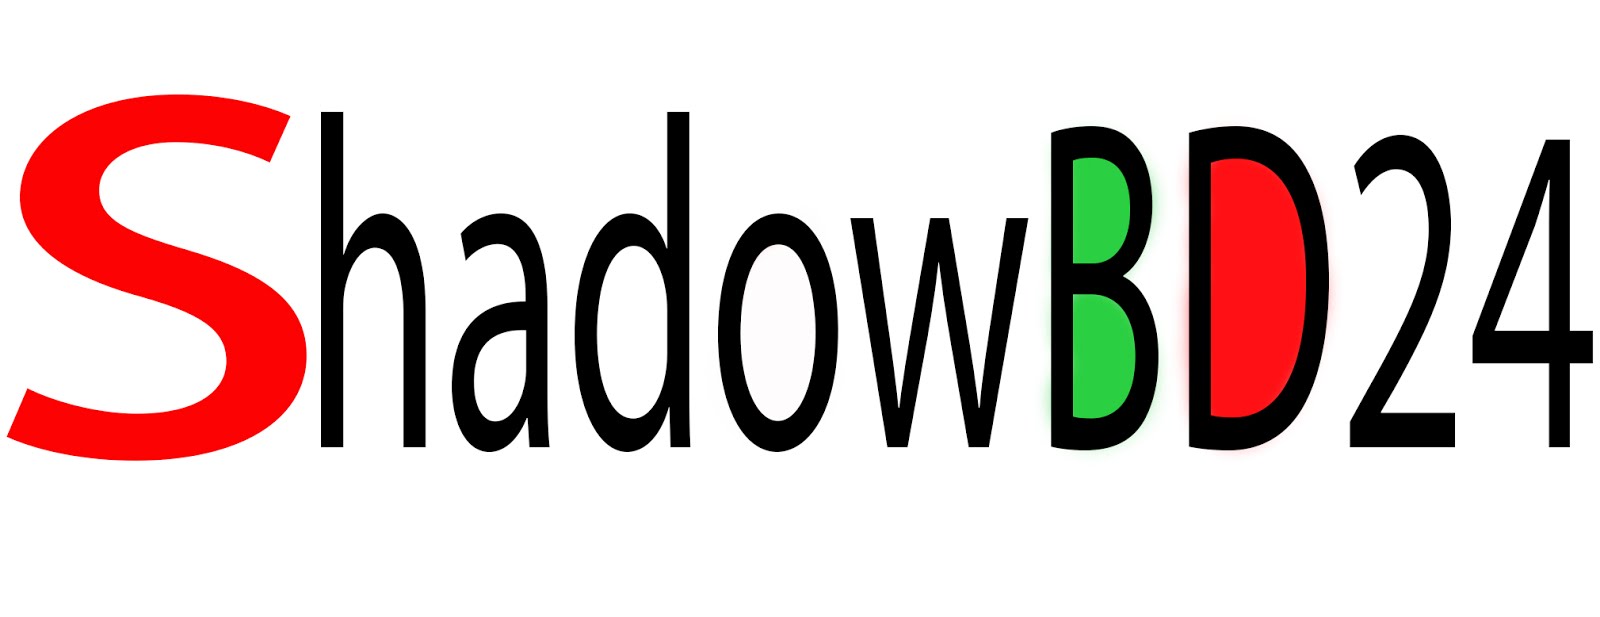 ShadowBD24